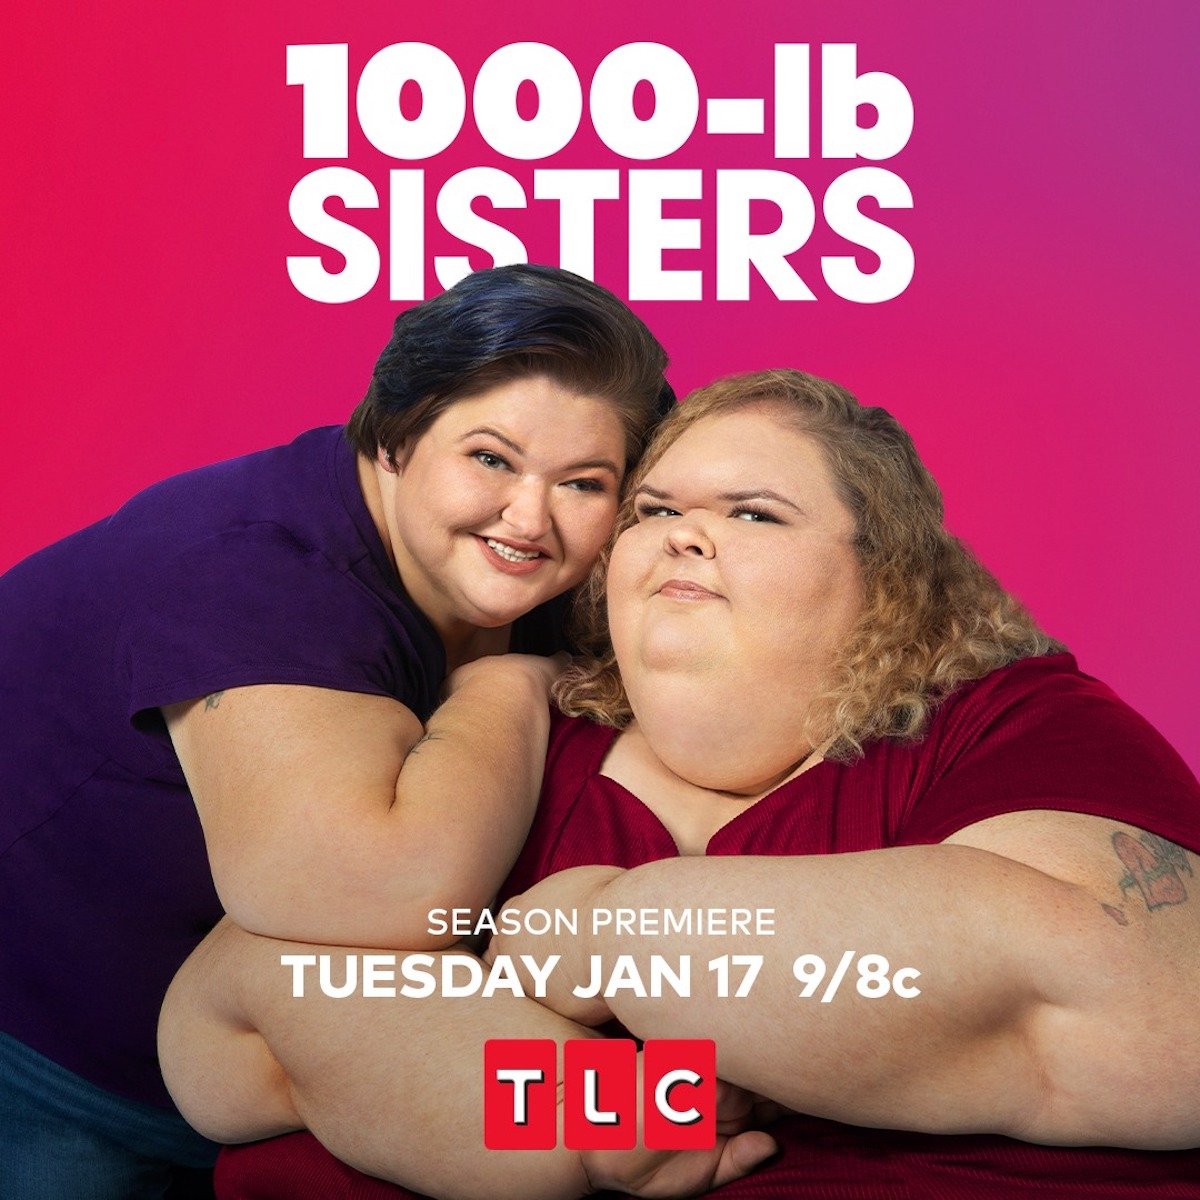 Amy Slaton Halterman and Tammy Slaton in a promotional image for TLC's '1000-lb Sisters' Season 4